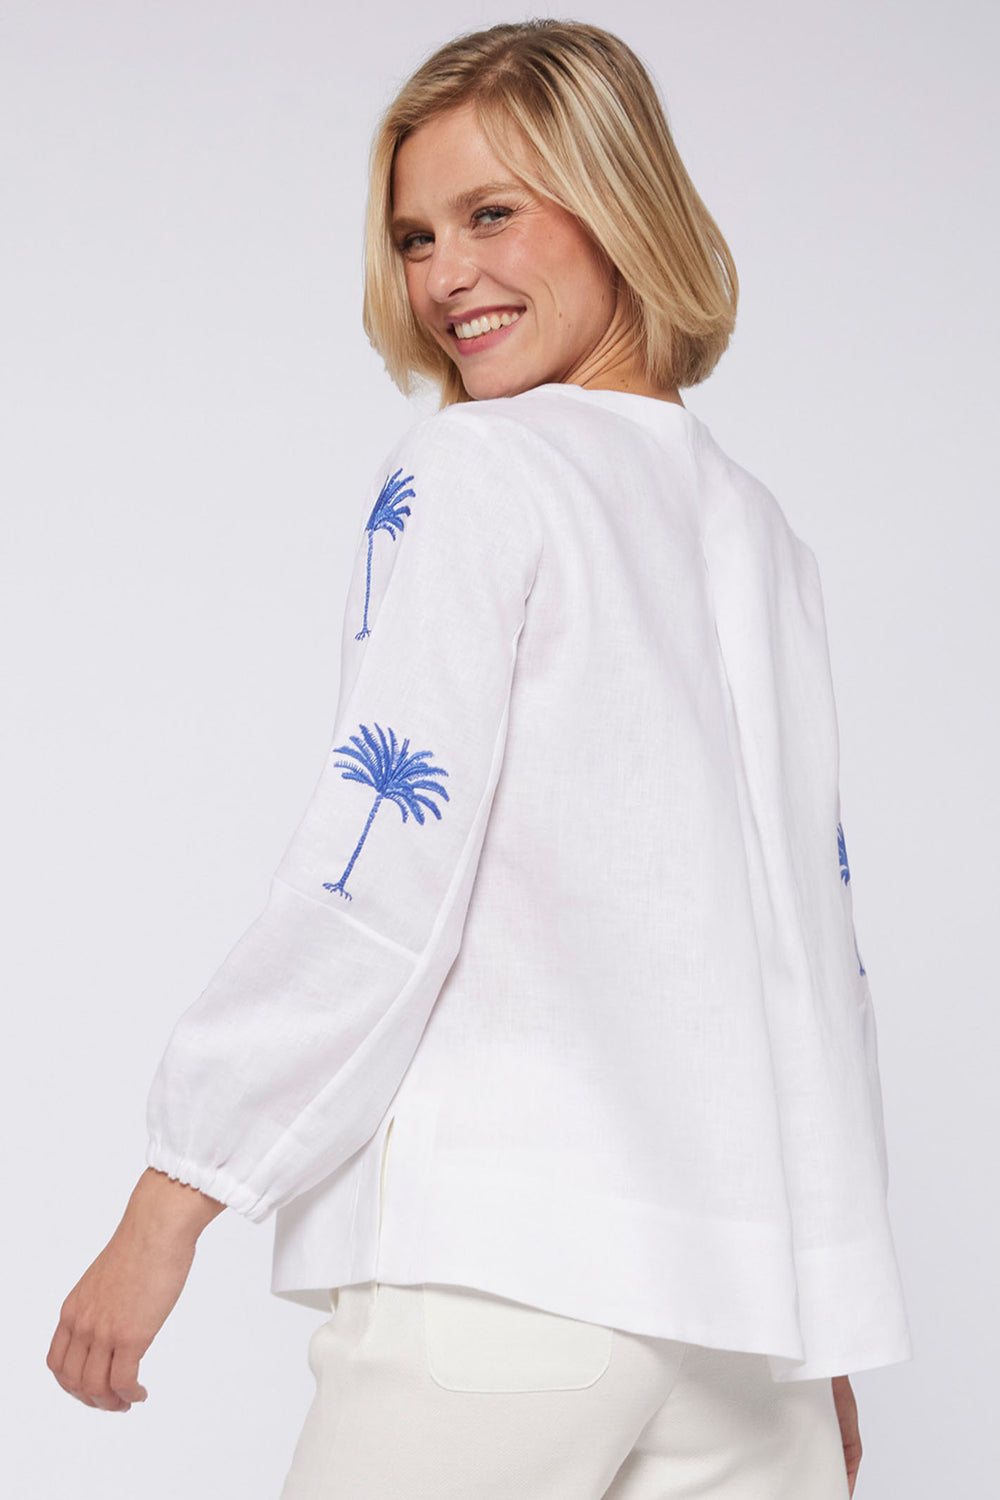 Vilagallo 30984 White Embroidered Sleeve V-Neck Blouse - Olivia Grace Fashion